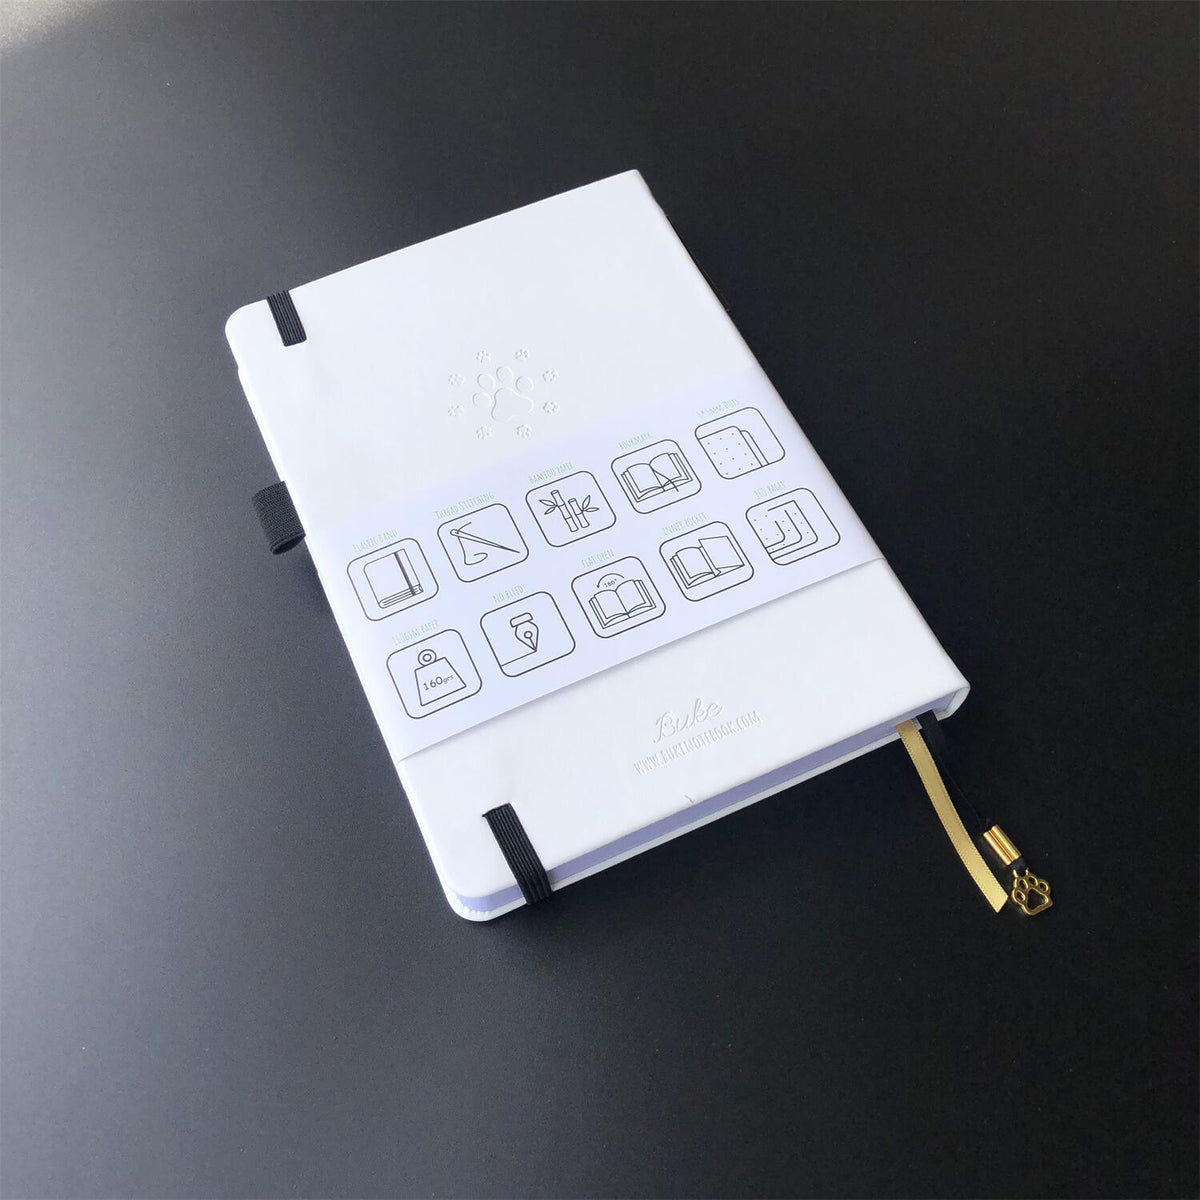 Bullet Dotted Journal 160GSM Bamboo Paper-NATURE WORLD - White - bukenotebook